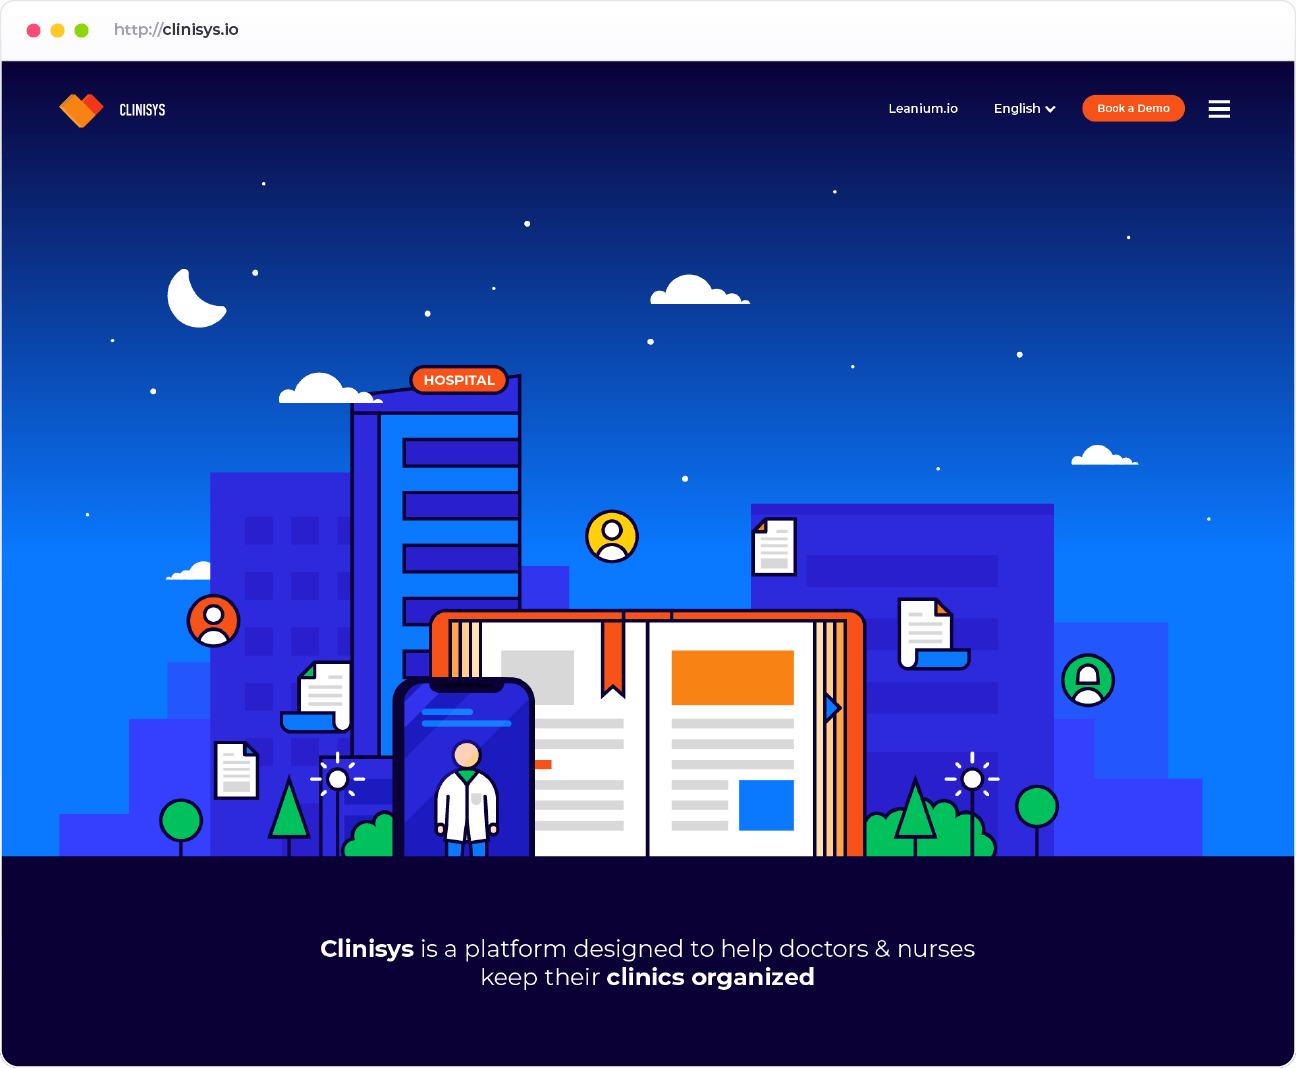 Clinisys.io website homepage design